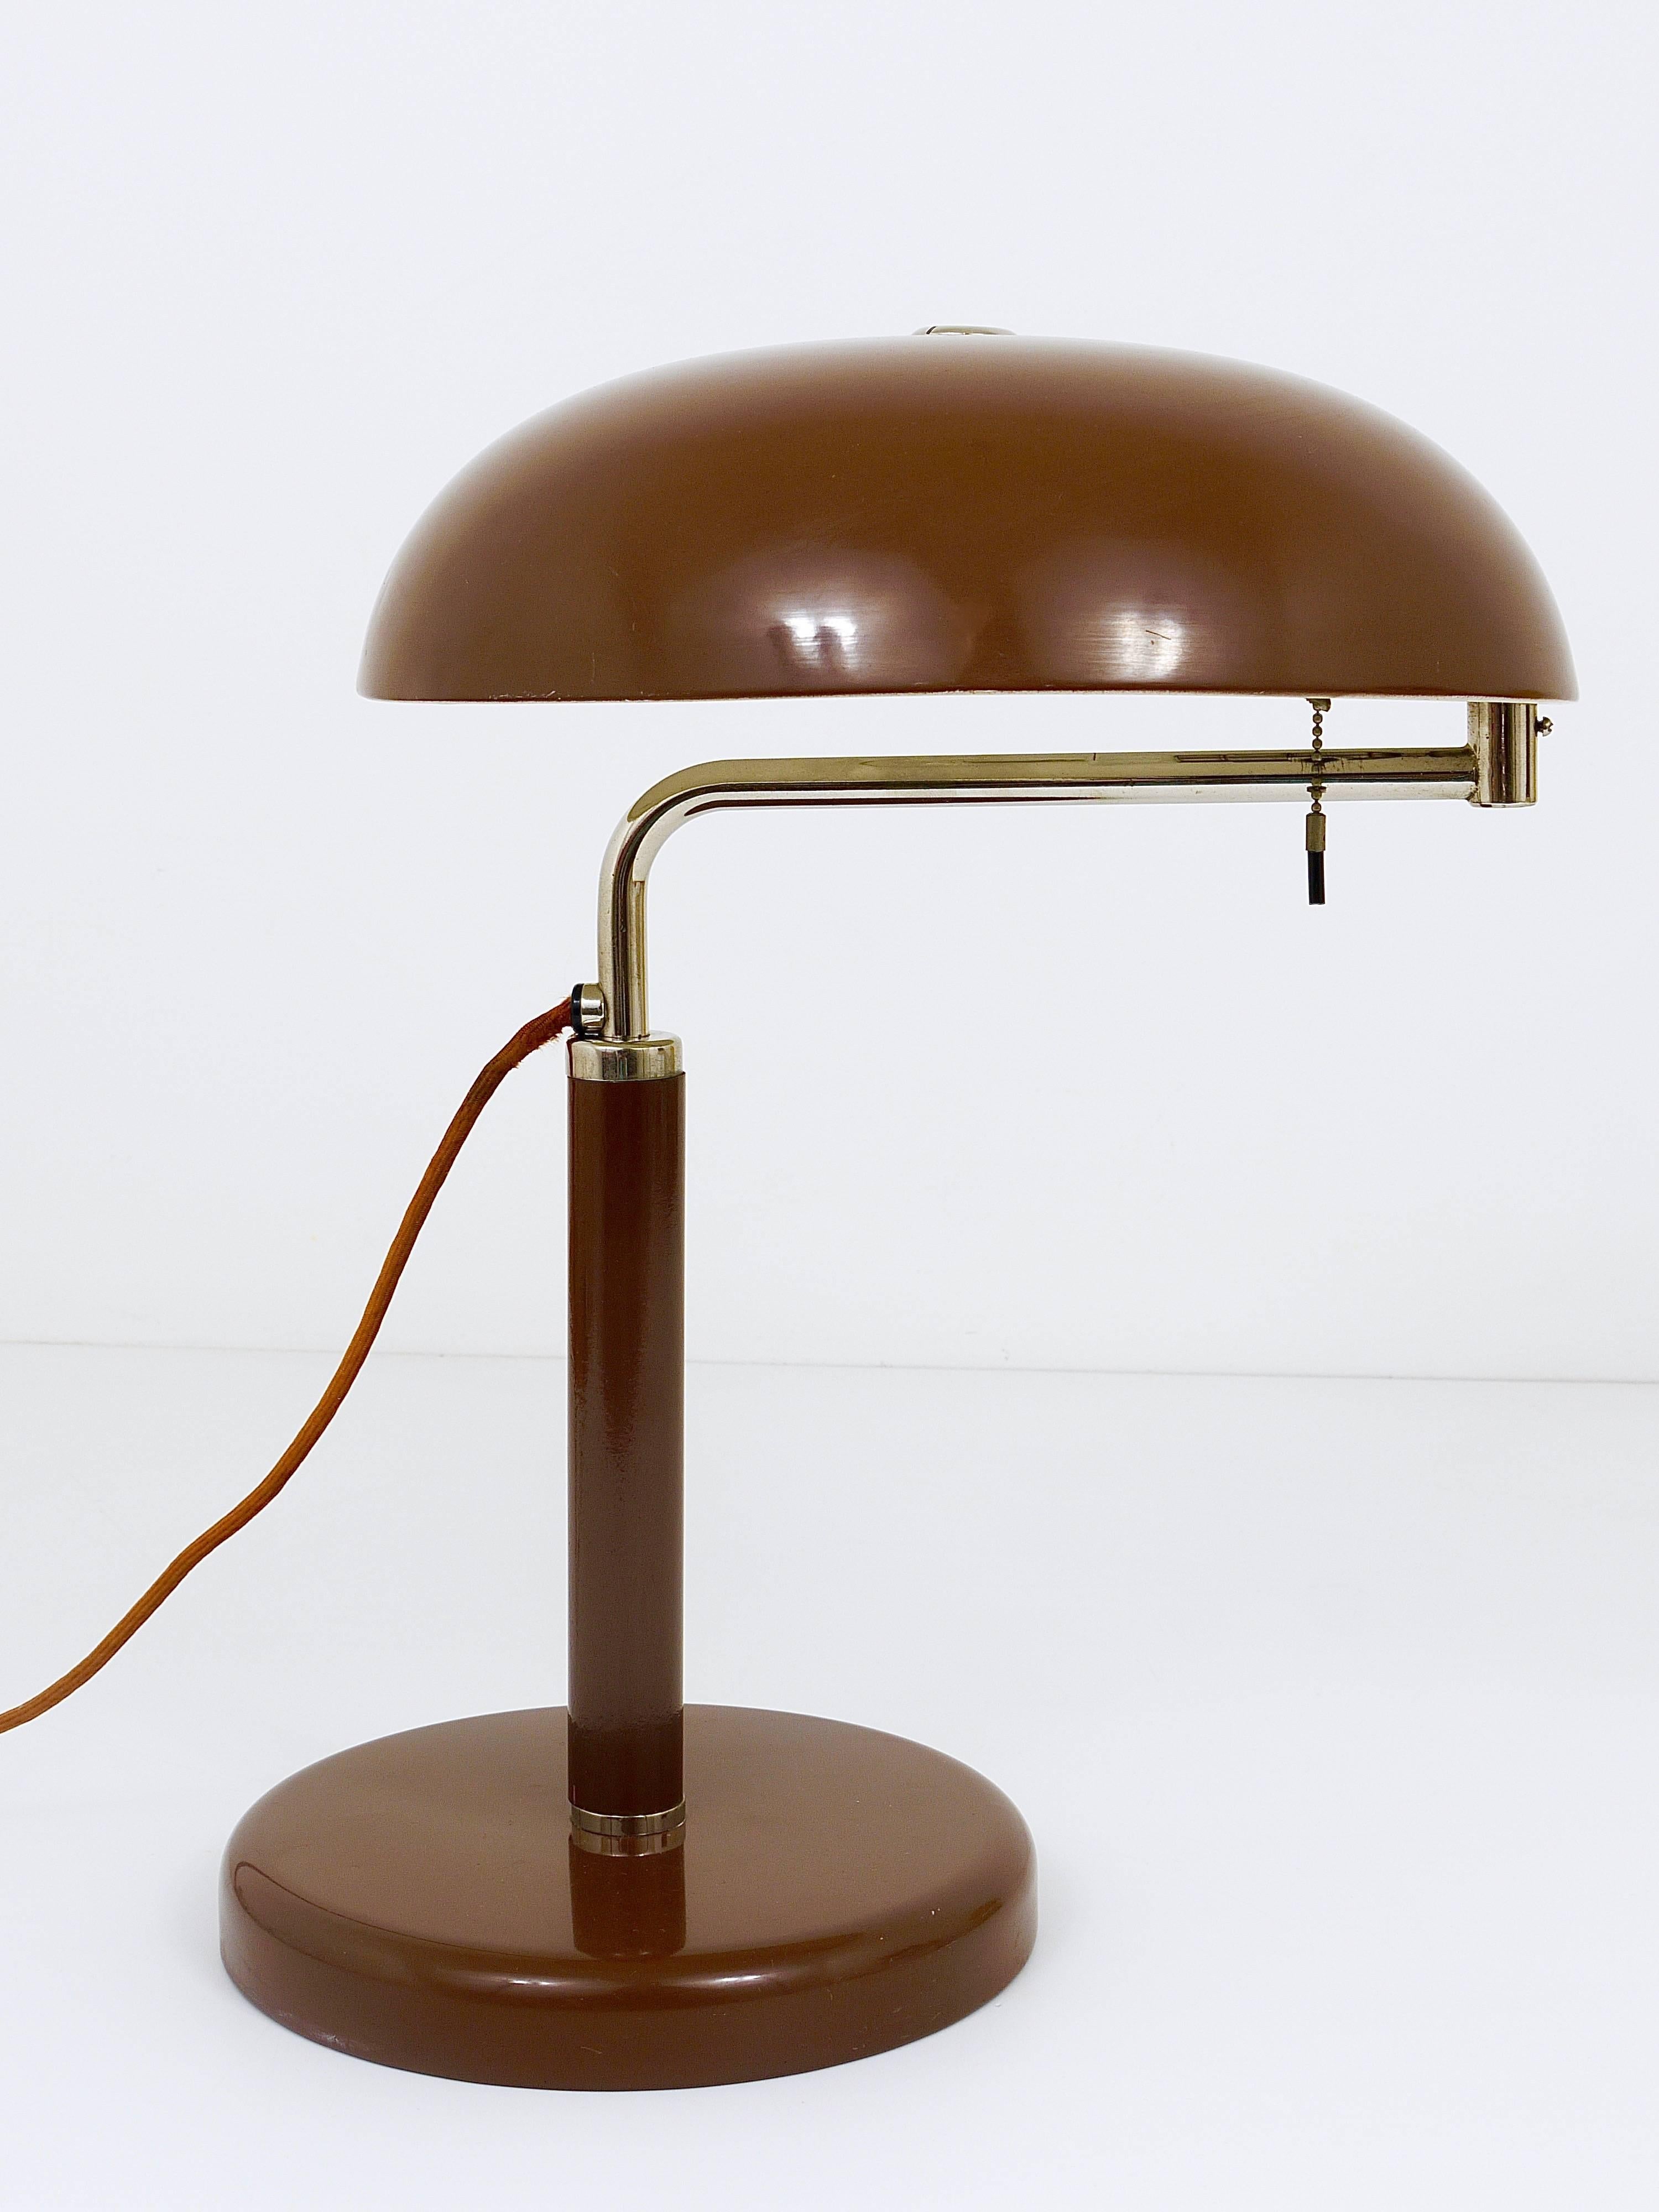 Lacquered Brown BAG Turgi Bauhaus Desk Lamp by Alfred Muller, Switzerland, 1930s